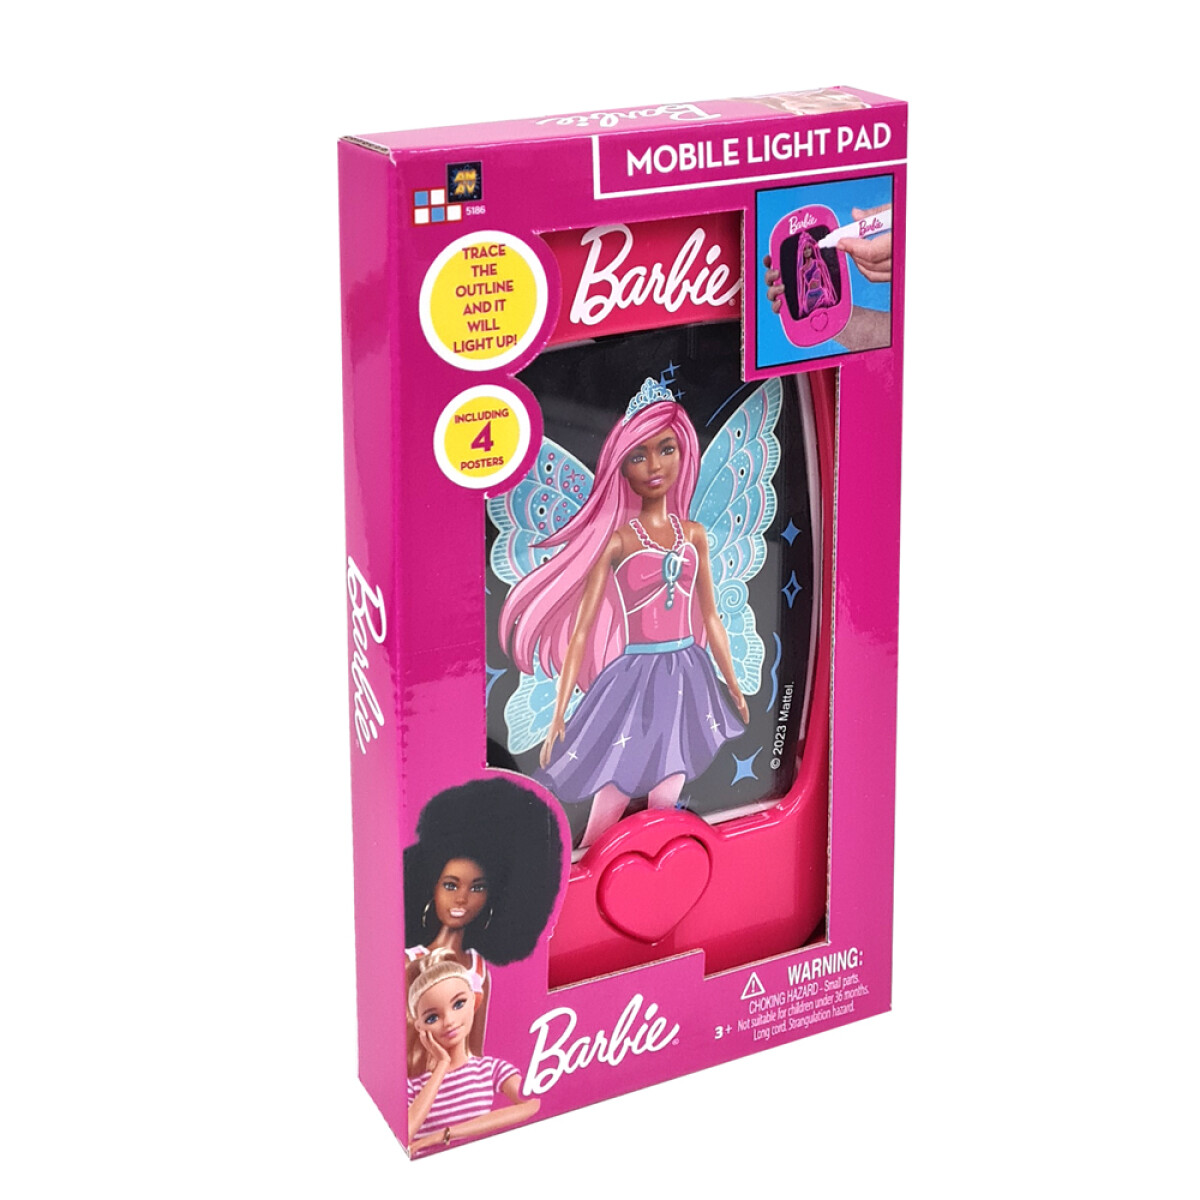 Tableta Mágica Barbie Mobile Light Pad - 001 